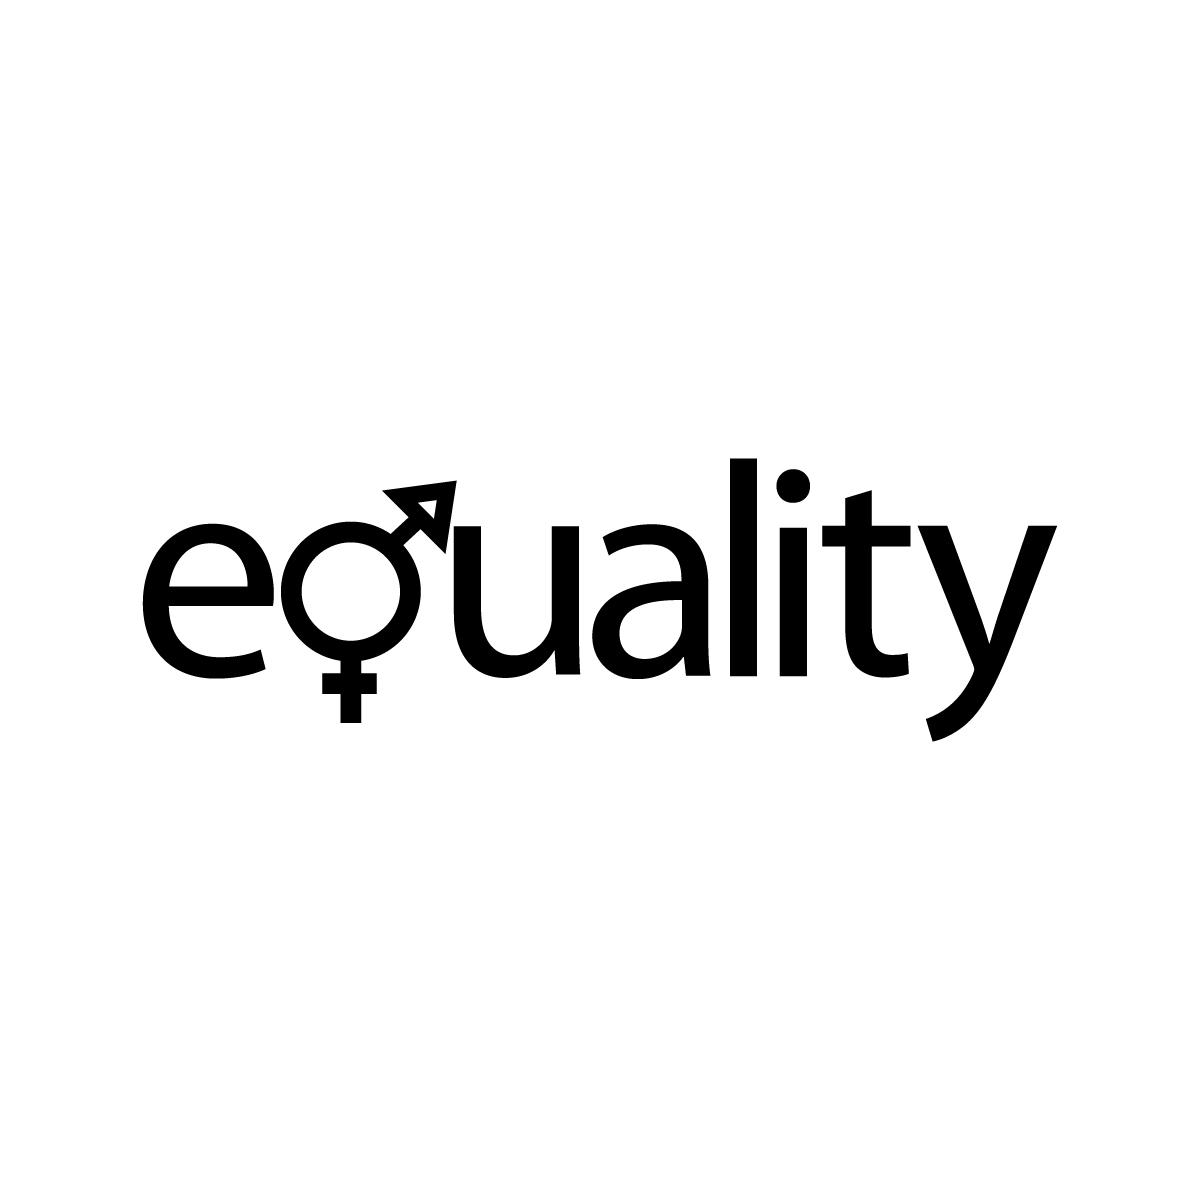 gender-equality-by-errica-on-deviantart